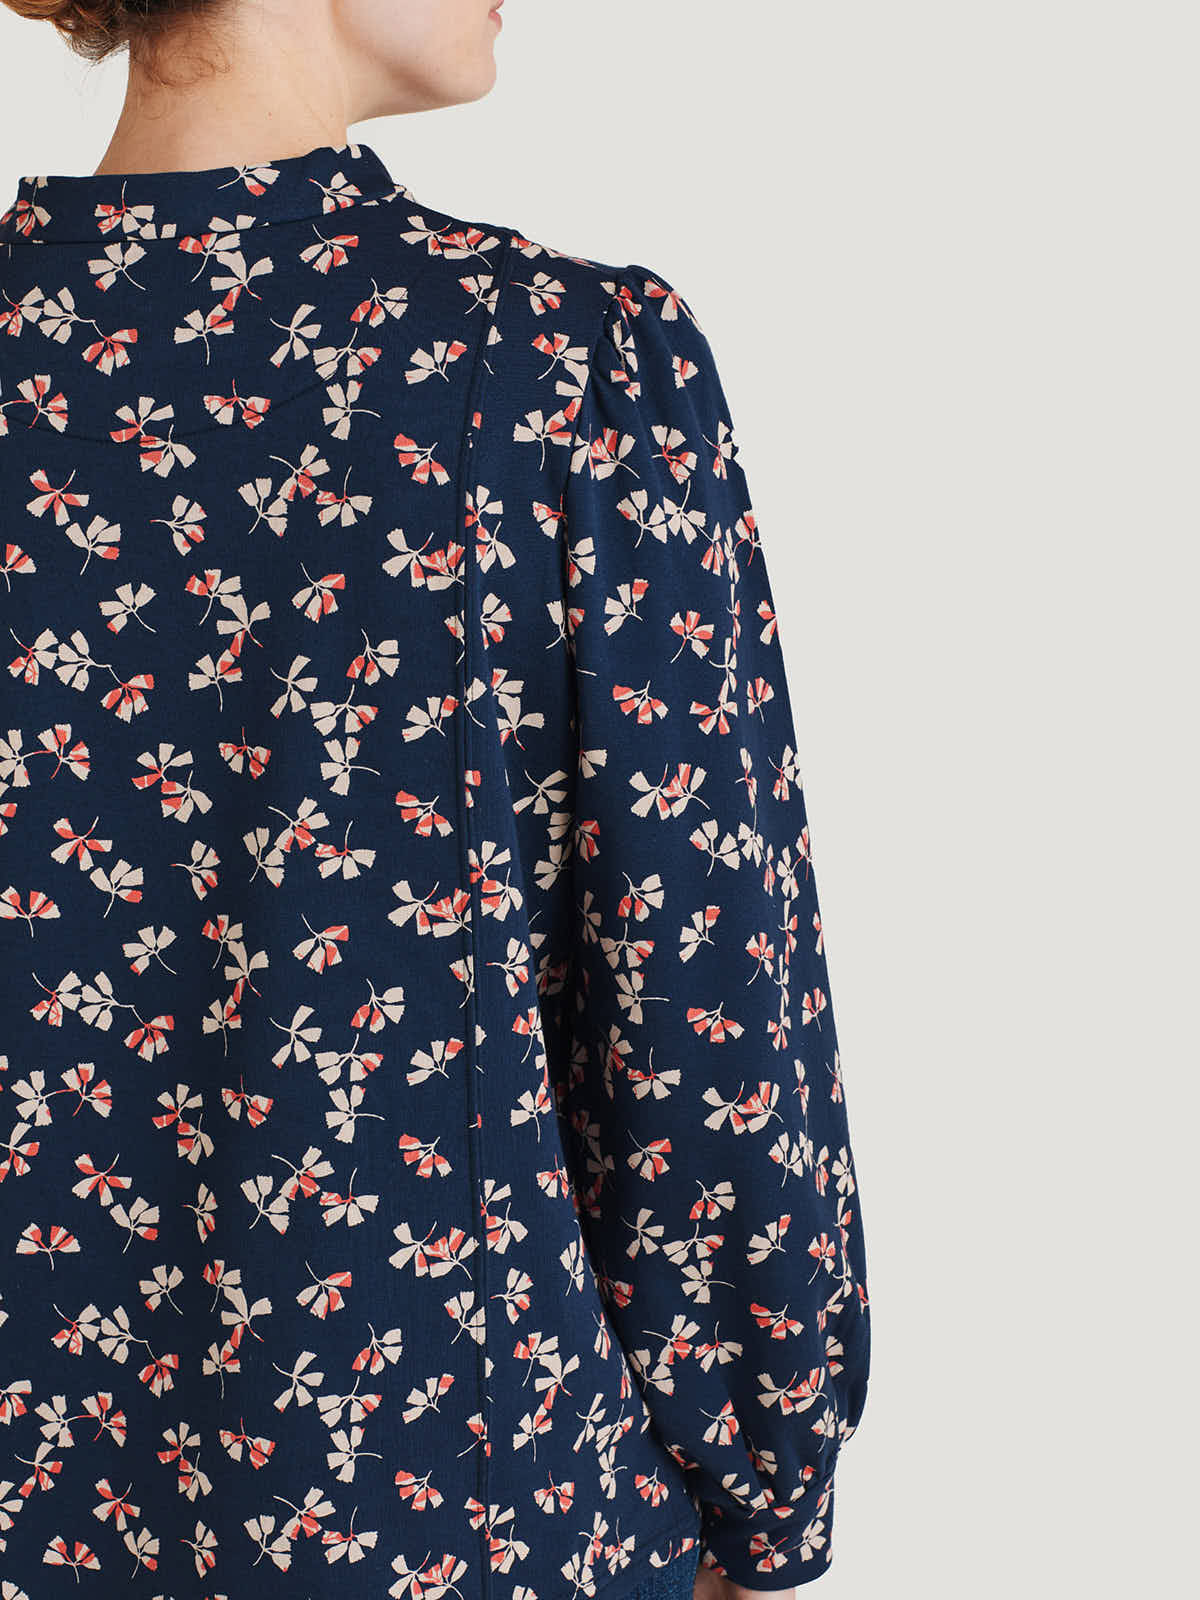 Aveline Organic Cotton Floral Sweatshirt - Navy